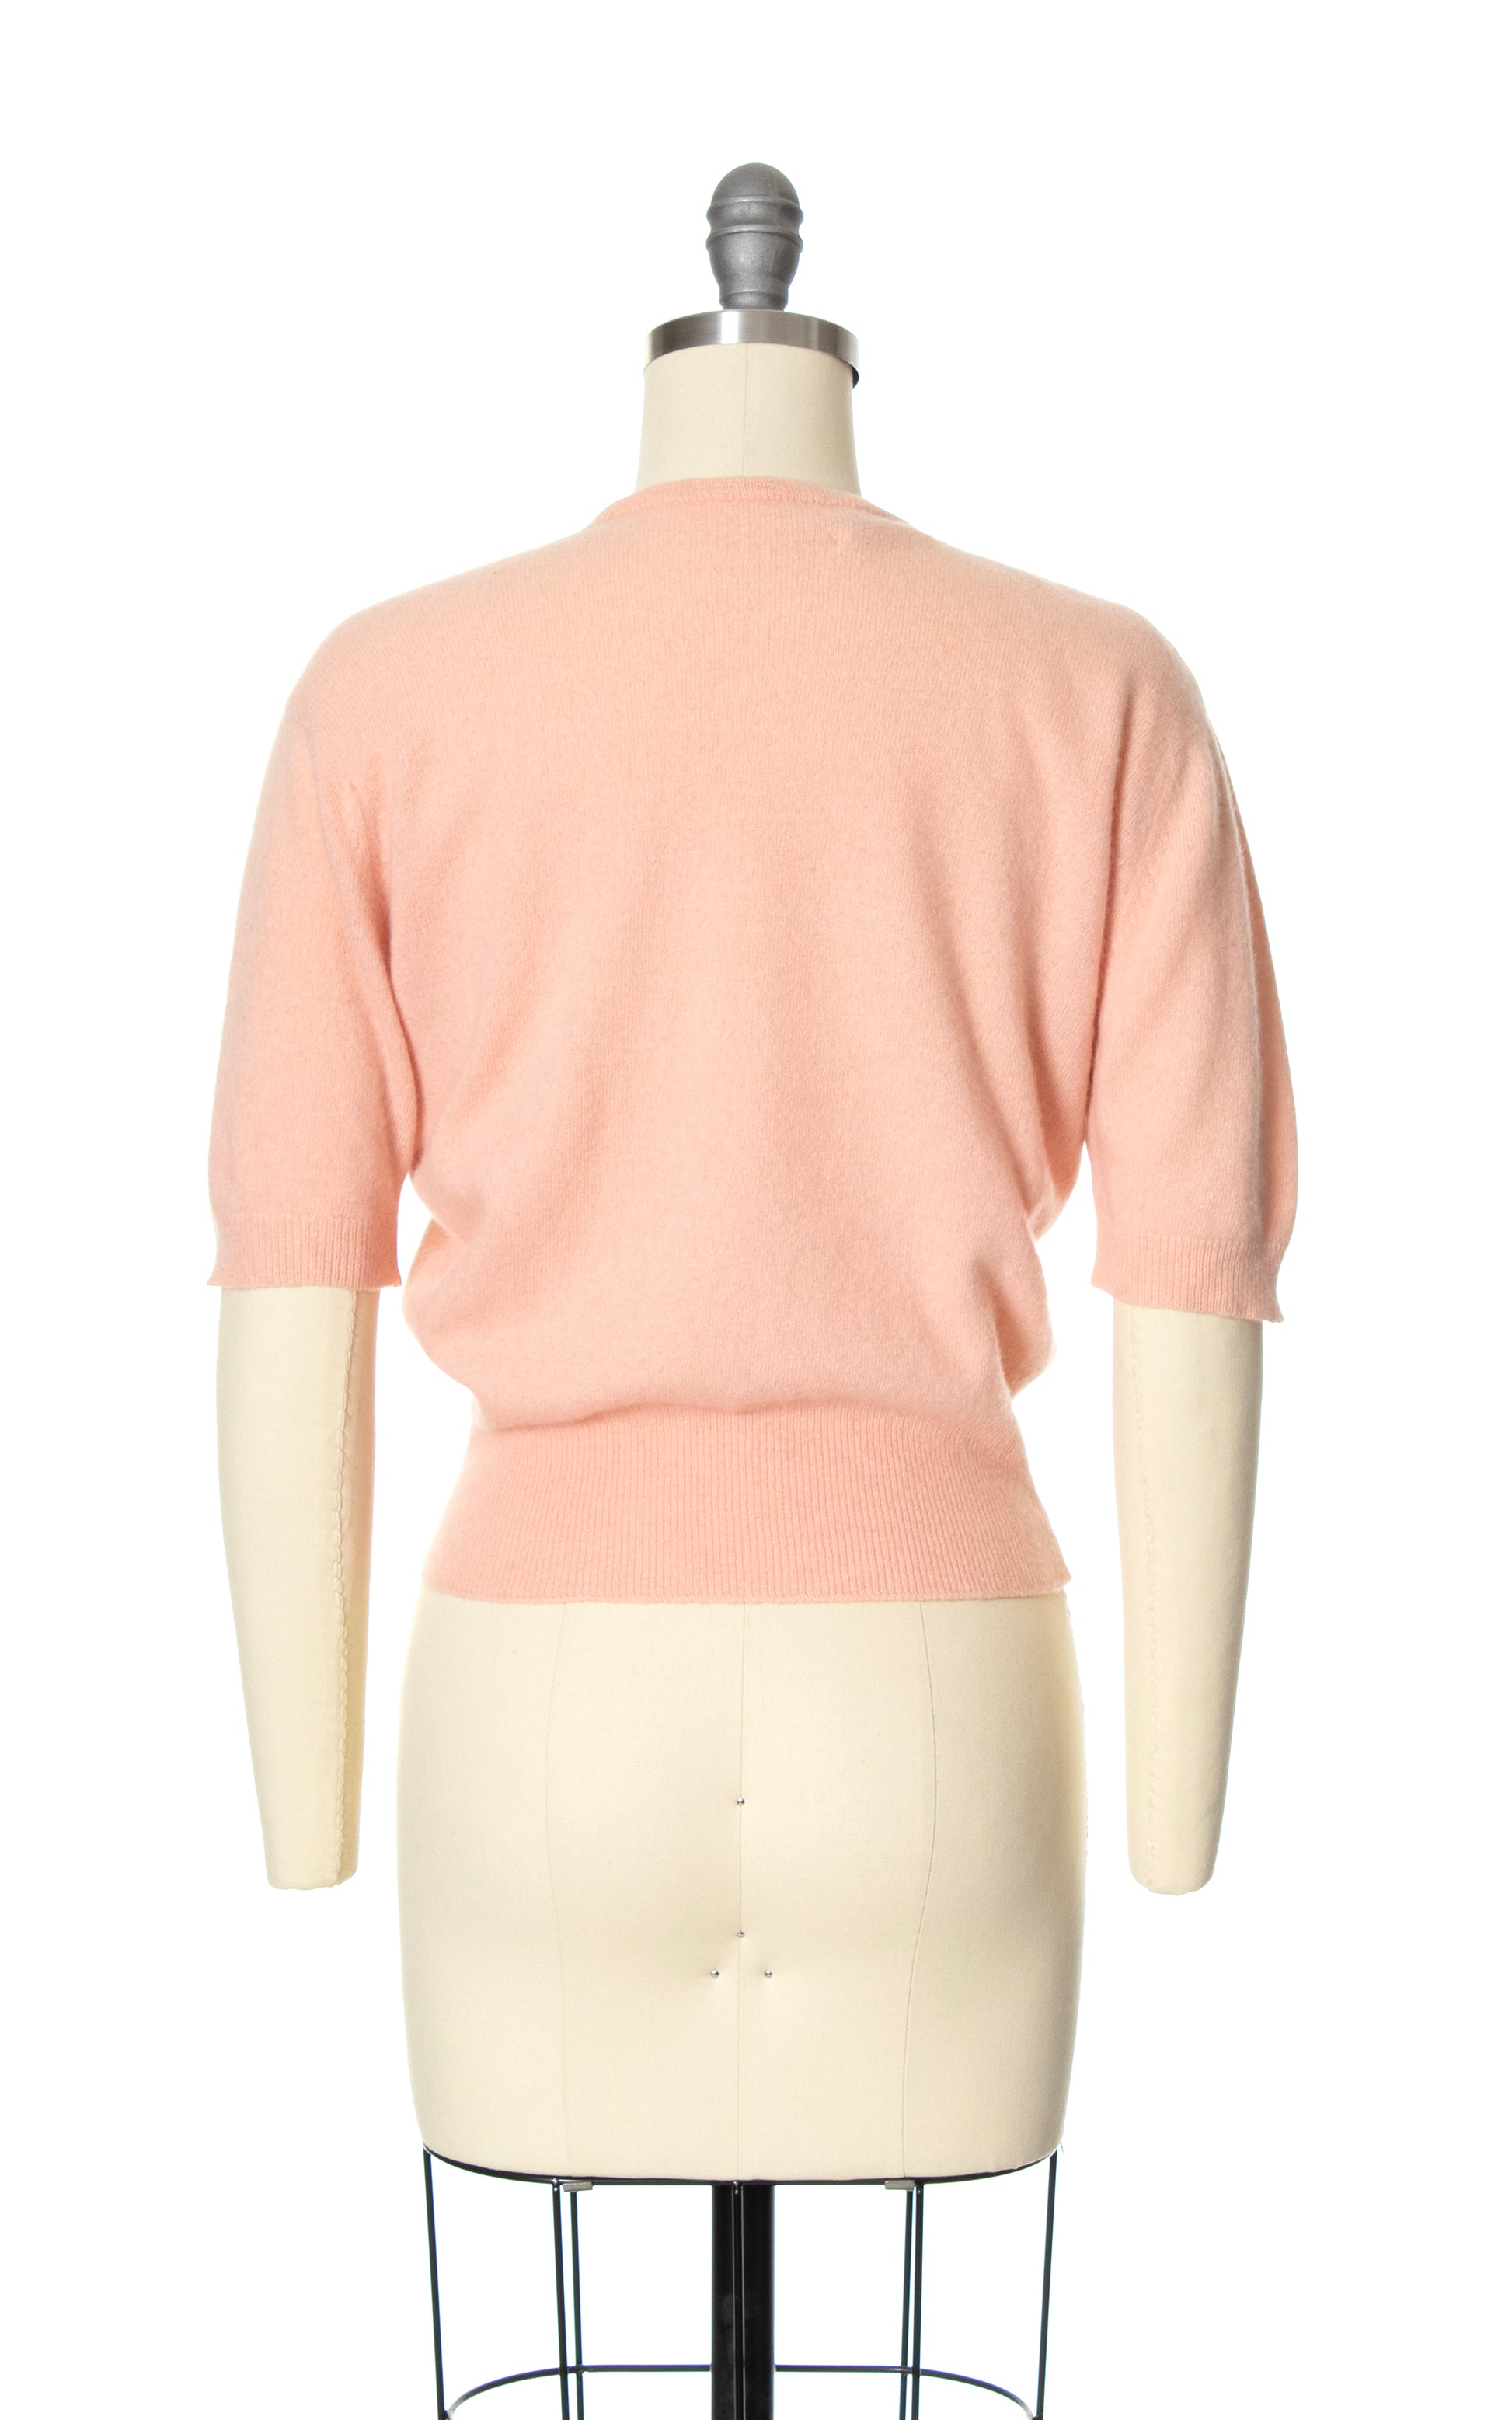 Vintage 50s 1950s DALTON Light Pink Knit Cashmere Sweater Top BirthdayLifeVintage